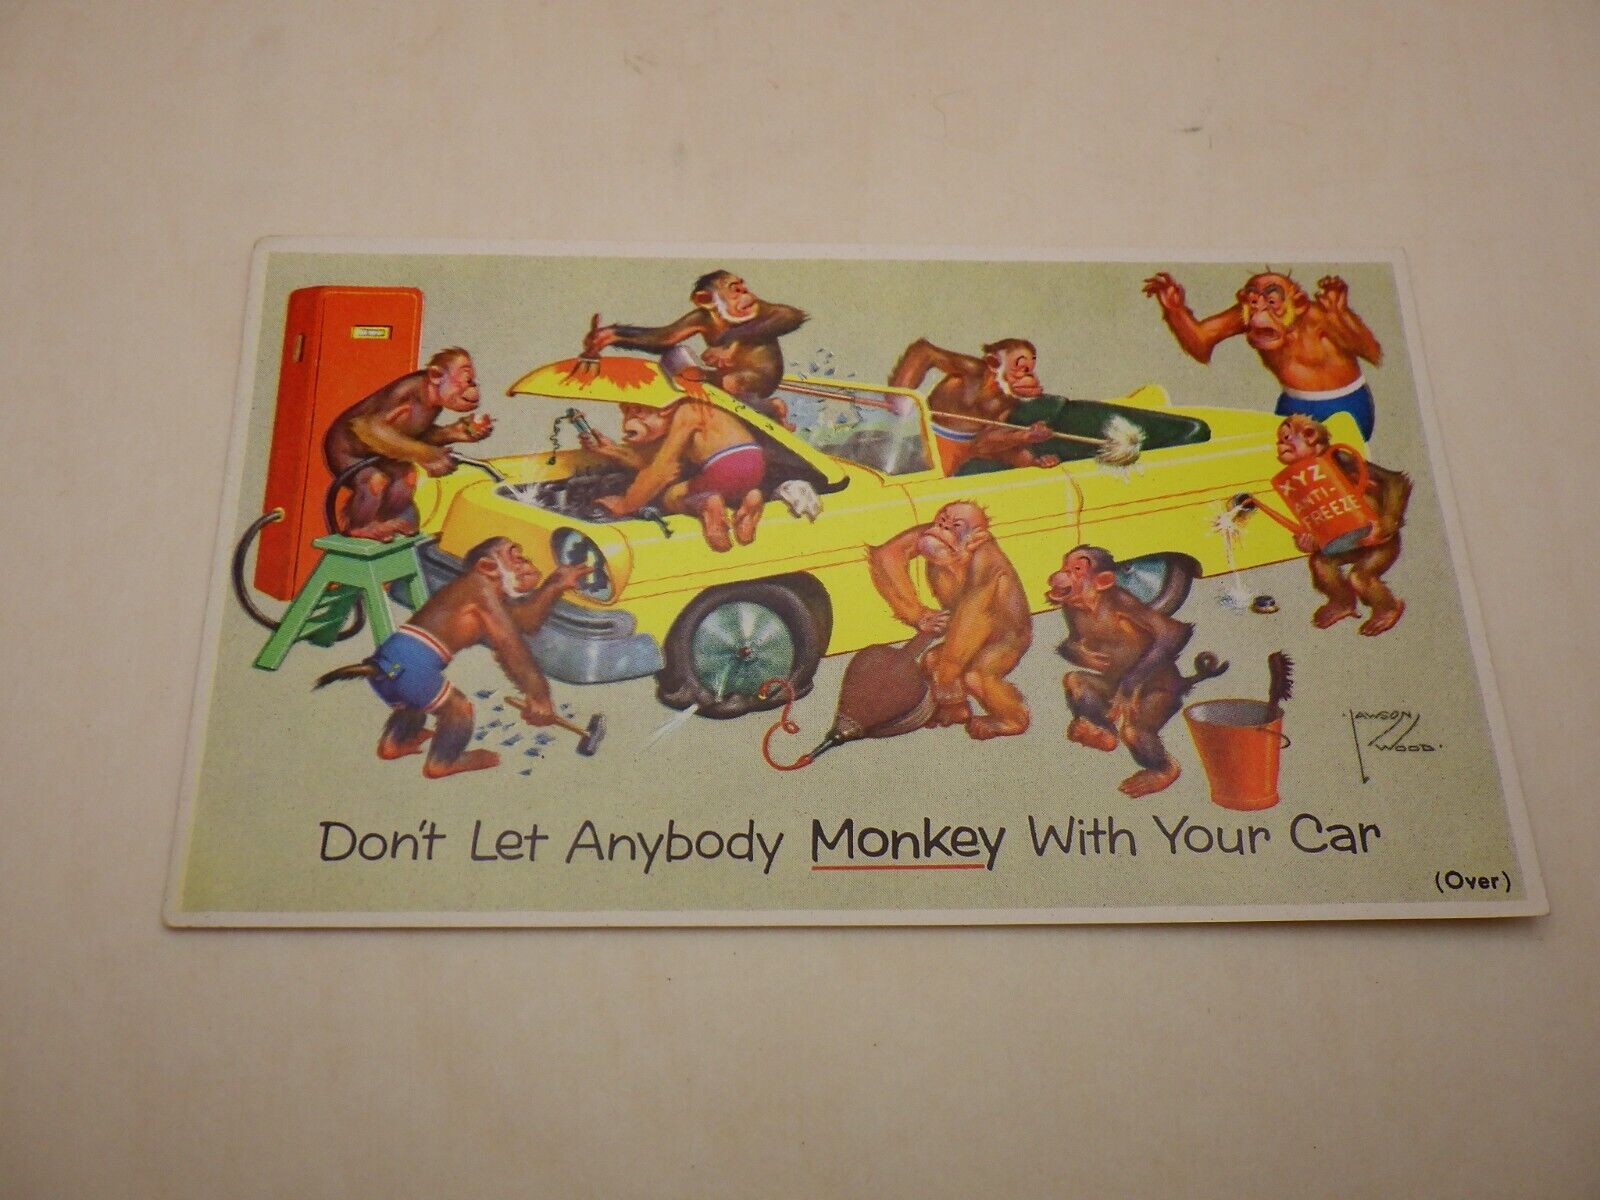 Prestone Anti-Freeze Monkey Around Car Oil Victorian Style Vintage Trade Card